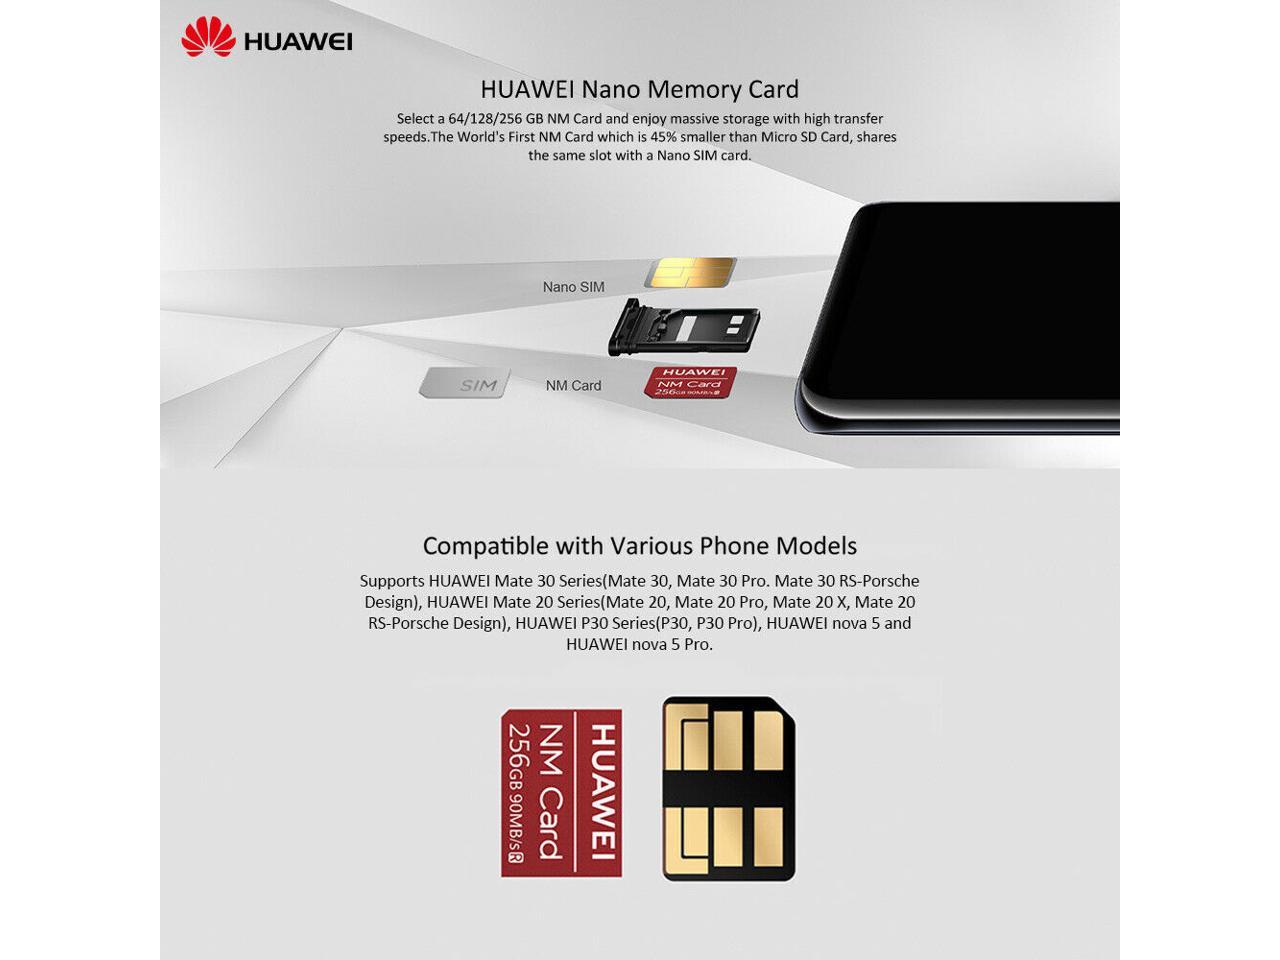 overhandigen zonde los van Huawei Nano Memory NM Card 128GB up to 90MB/s memory card For Huawei Mate  30, Mate 30 Pro,Mate 30 RS Porsche, Mate 20,Mate 20 X,Mate 20 X 5G,P30,P30  Pro,Nova 5,Nova 5 Pro -